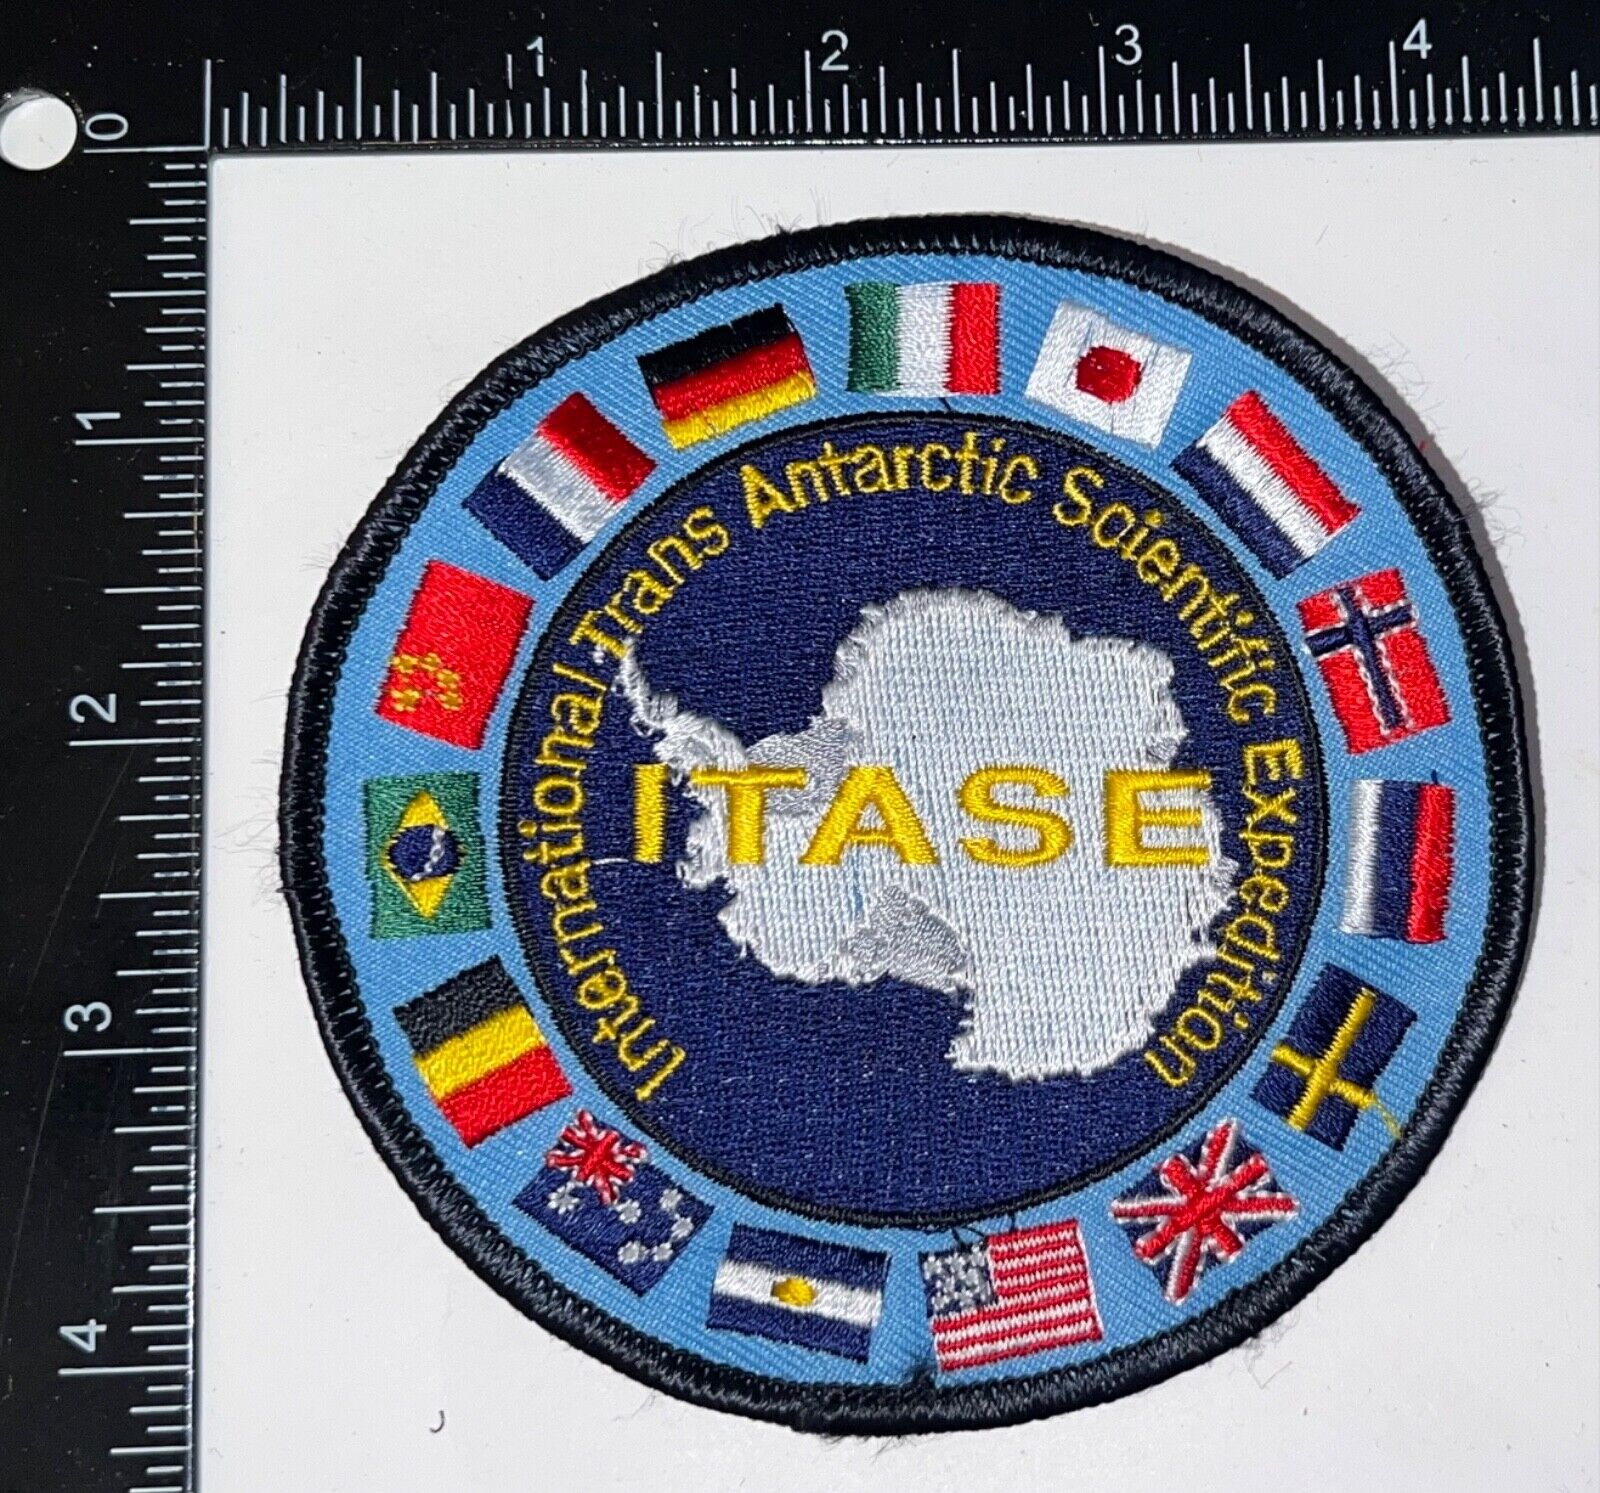 ITASE International Trans Antarctic Scientific Expedition Patch